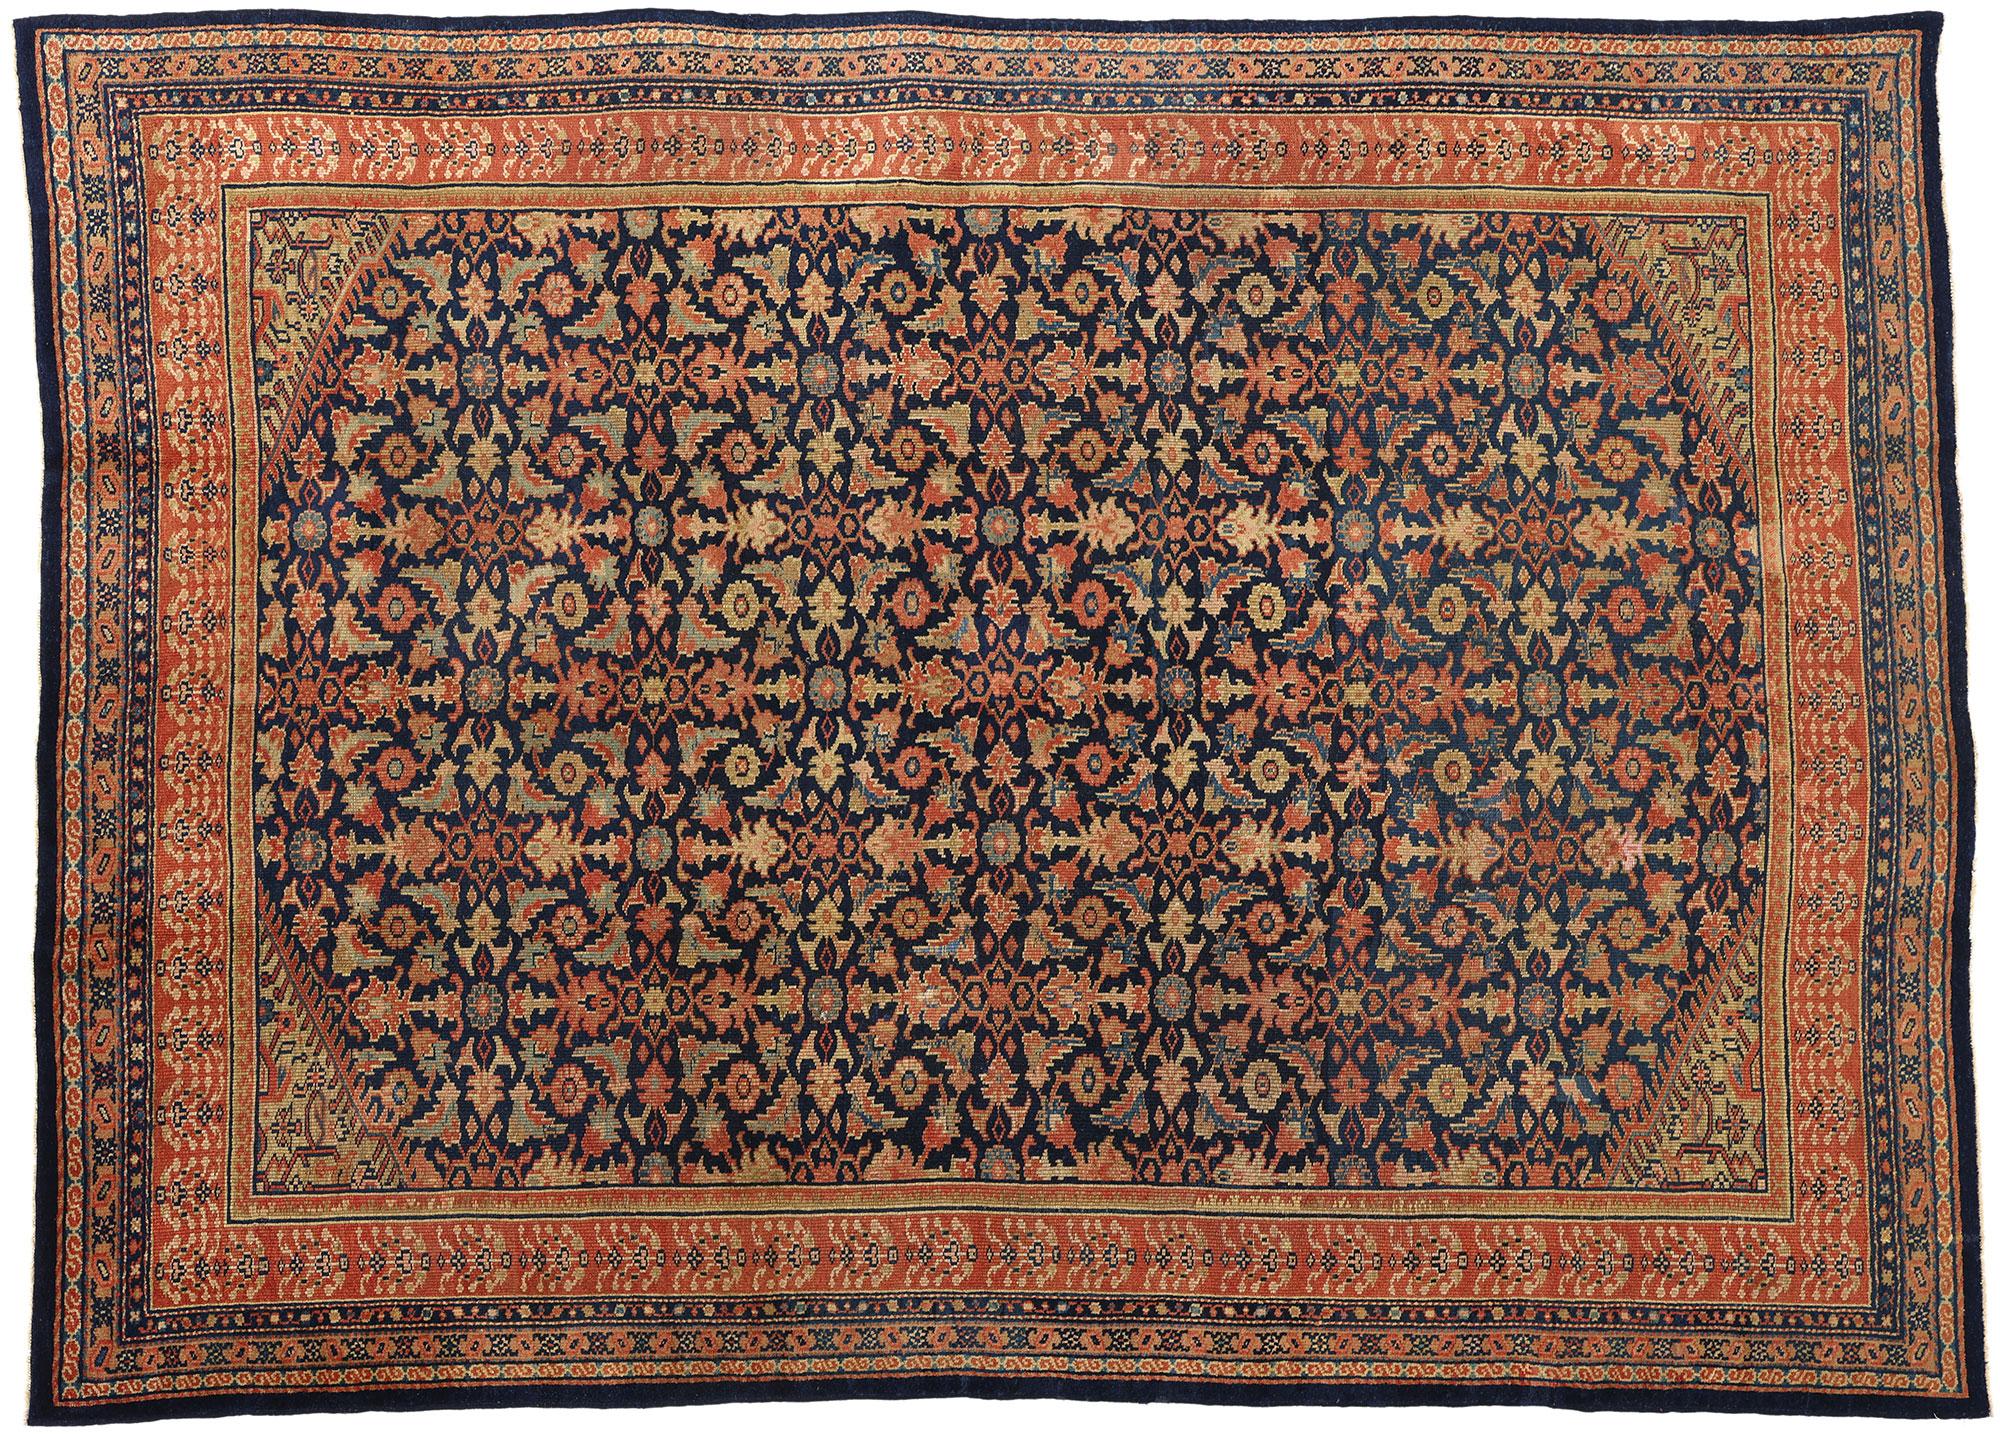 Late 19th Century Distressed Antique Navy Blue Persian Kurdish Carpet For Sale 4